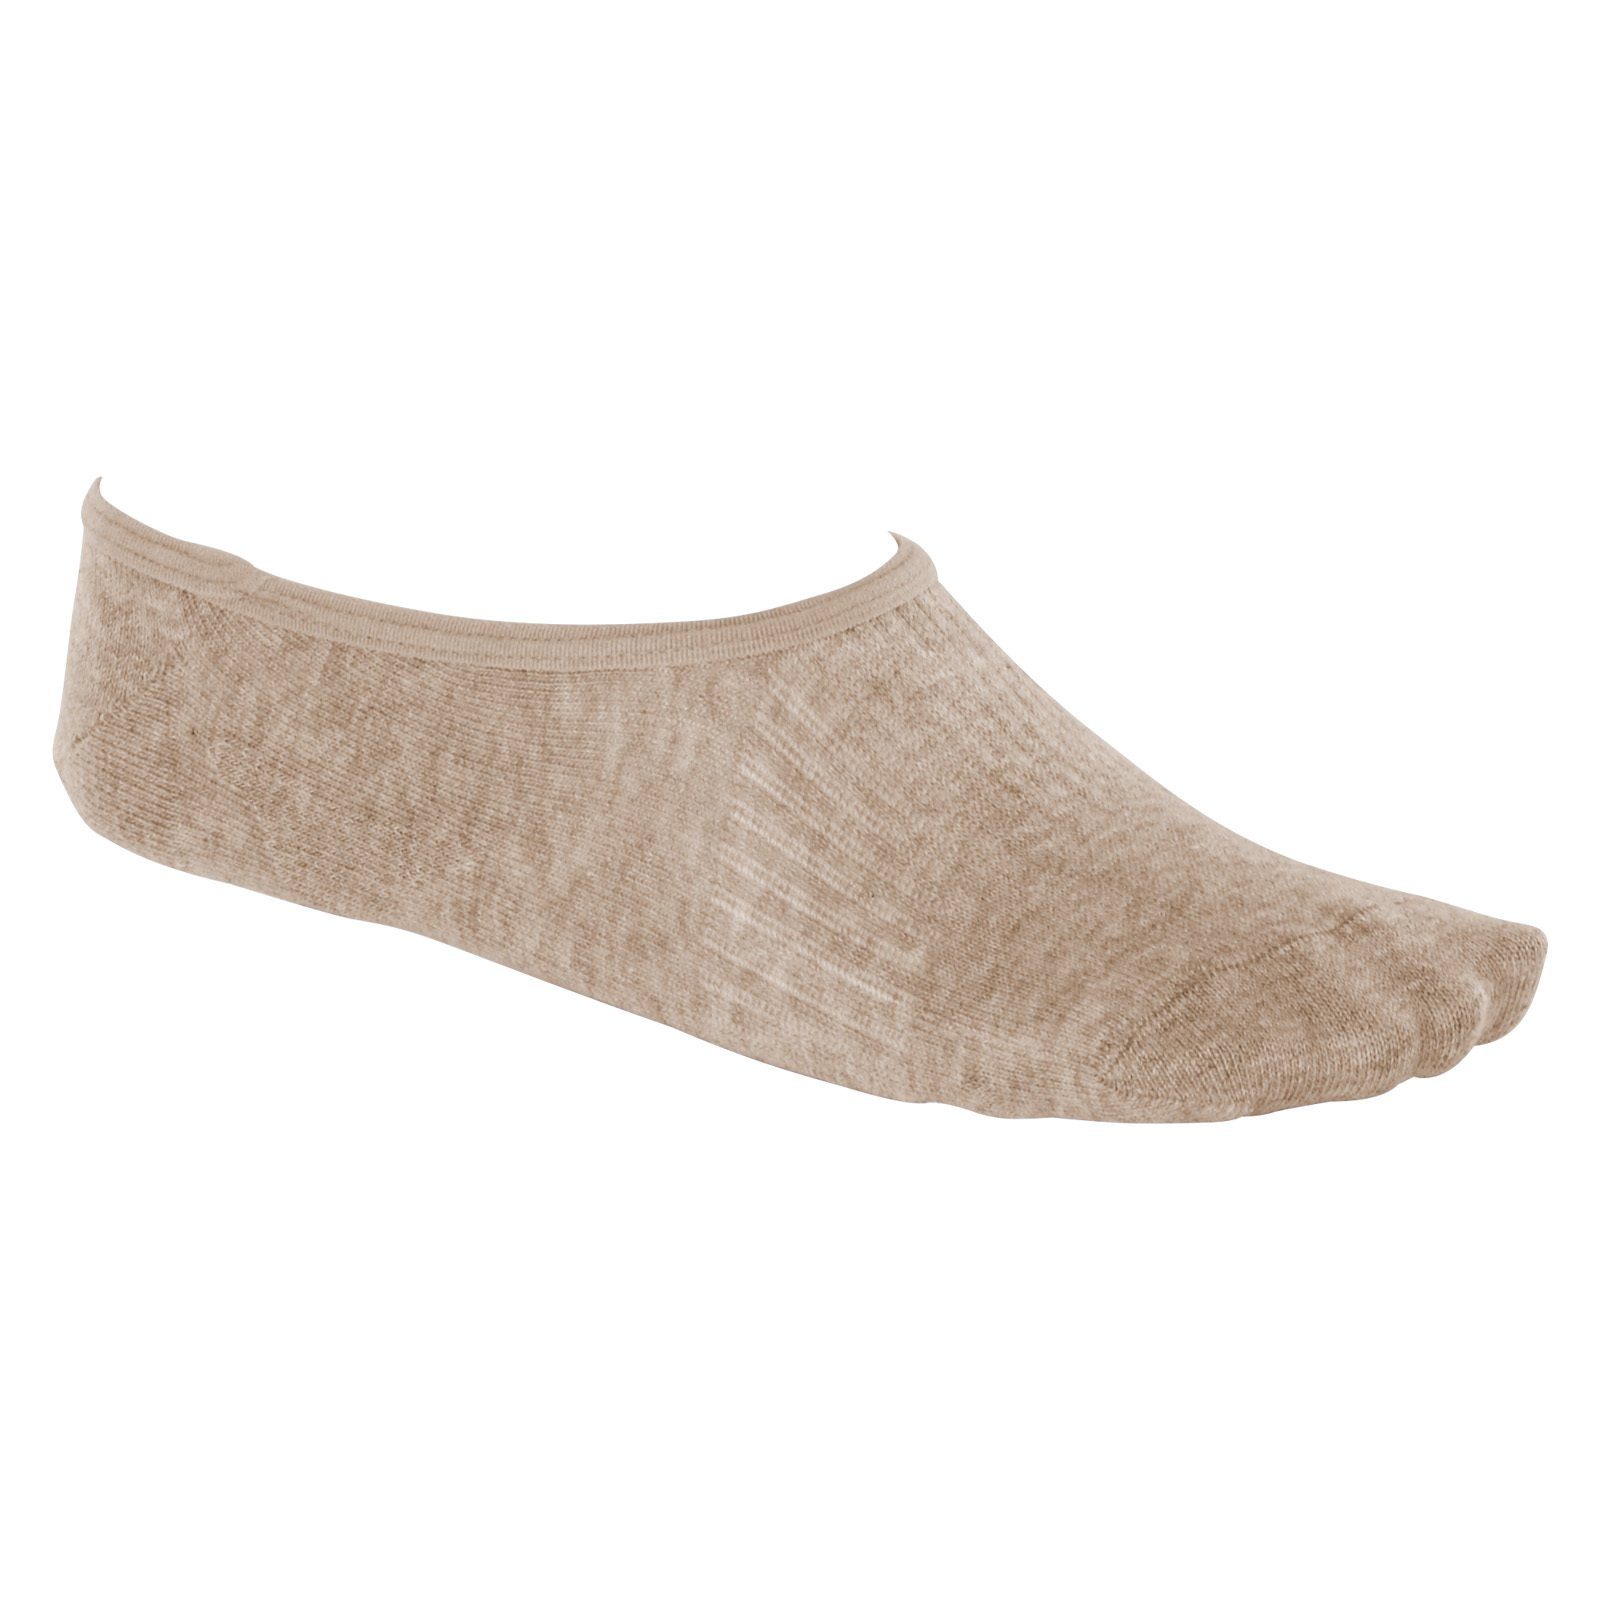 Birkenstock Füßlinge »Herren Sneaker Socken Invisible - Füßlinge, Cotton«  online kaufen | OTTO